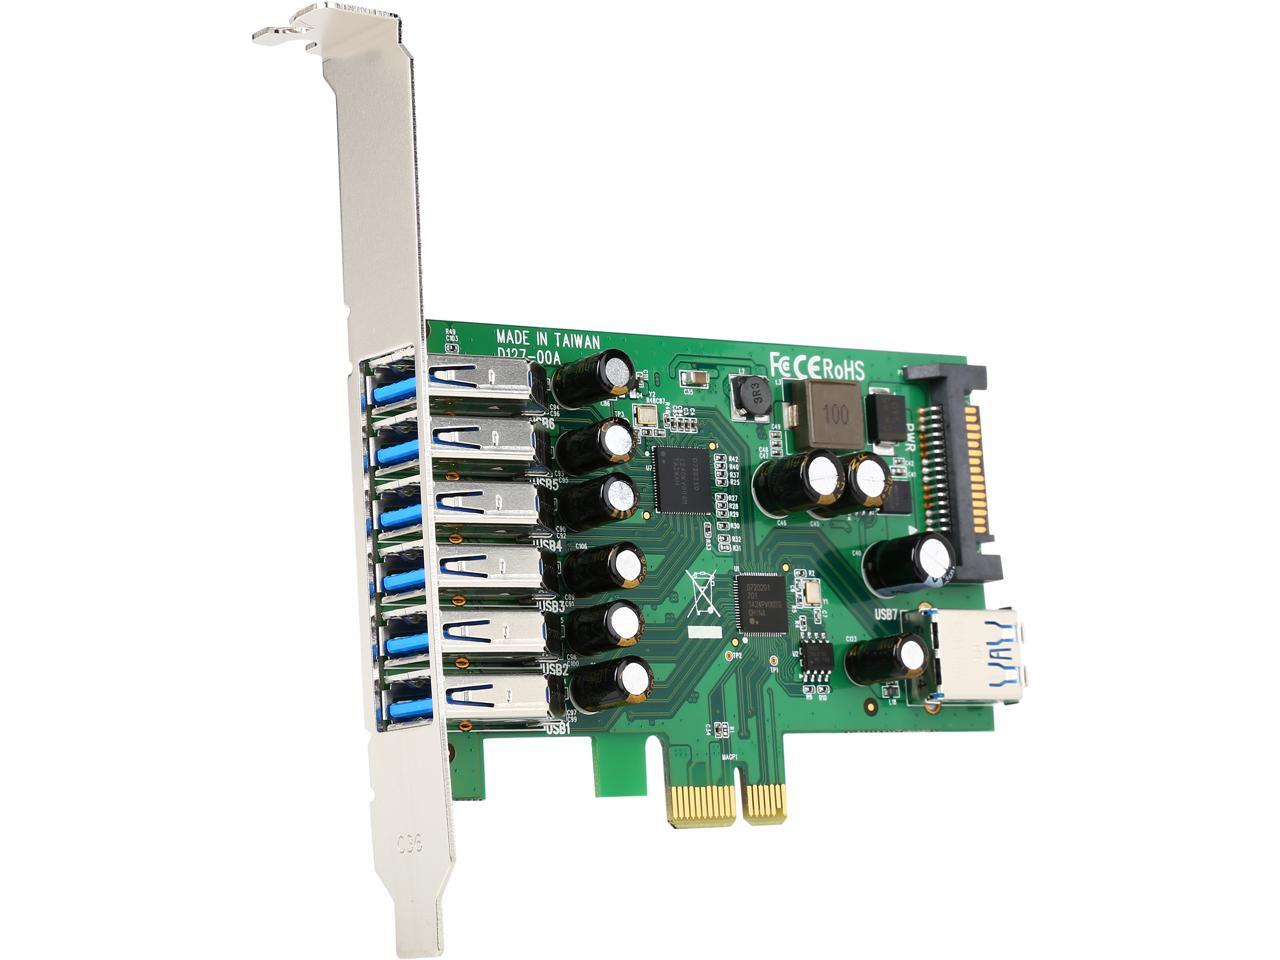 Chipset: Renesas afines PD720201 + VIA VL812 ULANSEN 7-port Superspeed USB 3.0 PCI — E Express Express Express Expansion Card con SATA 15Pin Connector para Desktops con energía nuclear 